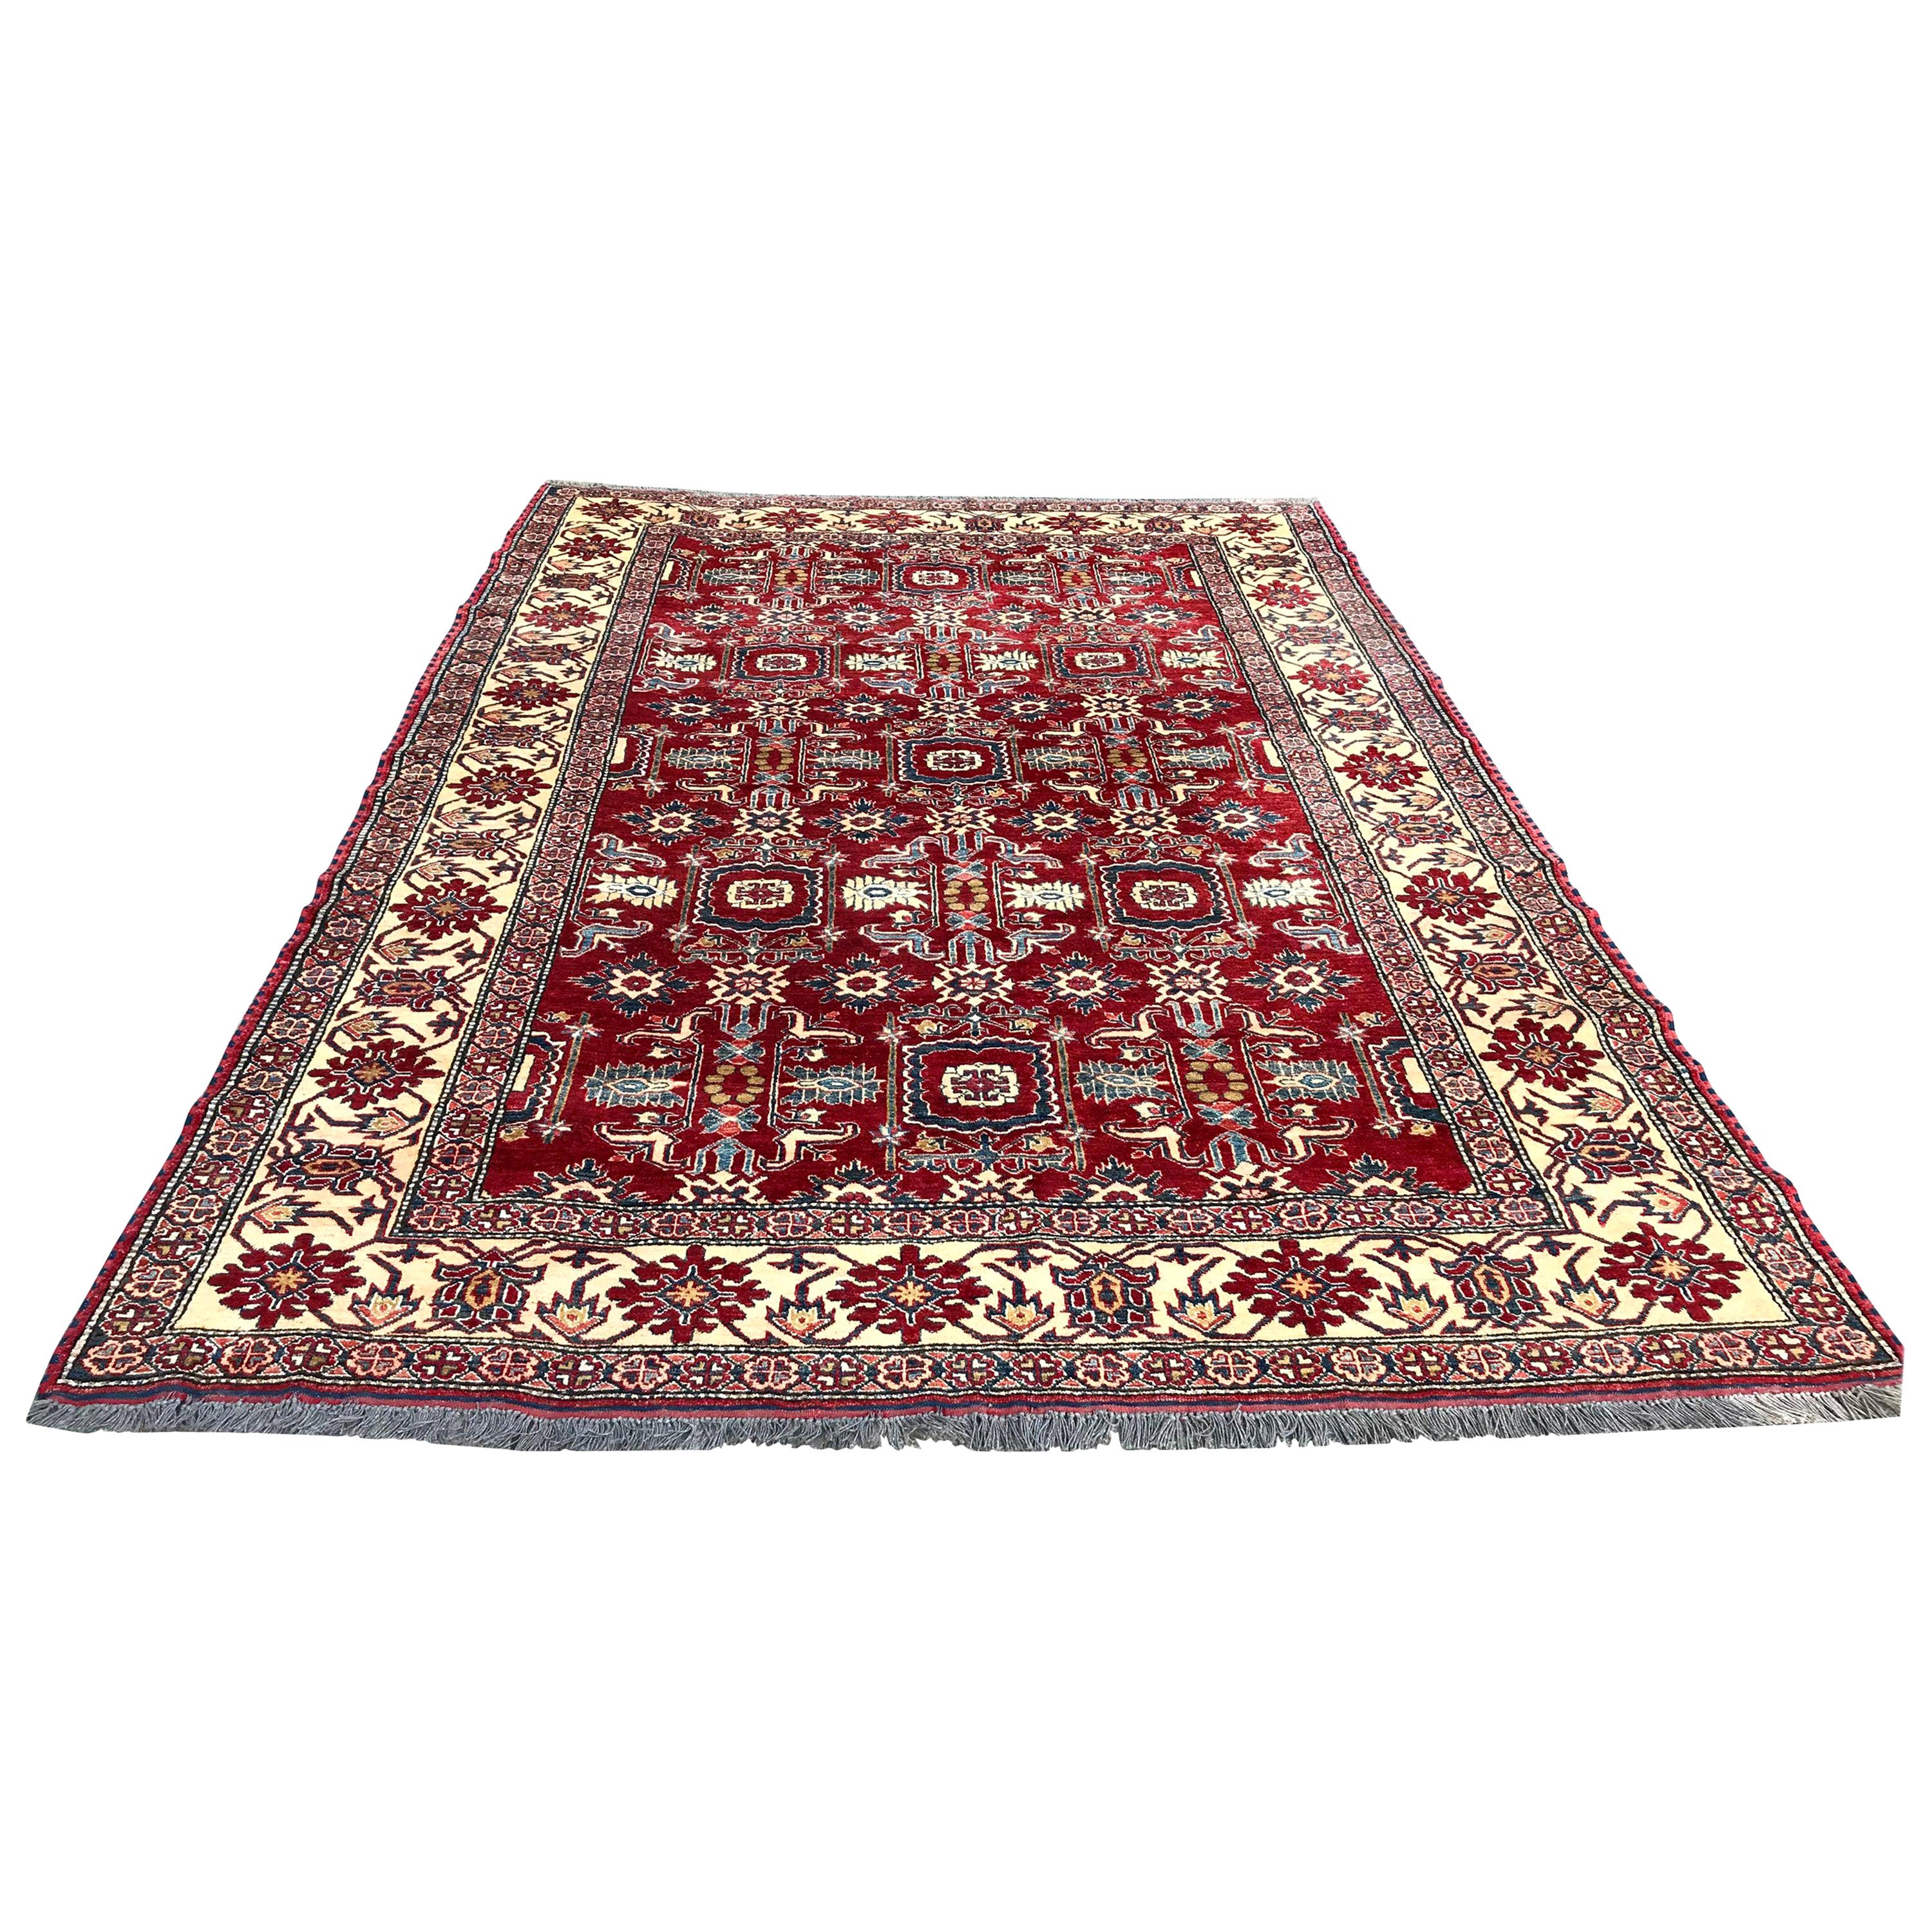 Bobyrug’s Beautiful Afghan Mahal Style Carpet For Sale